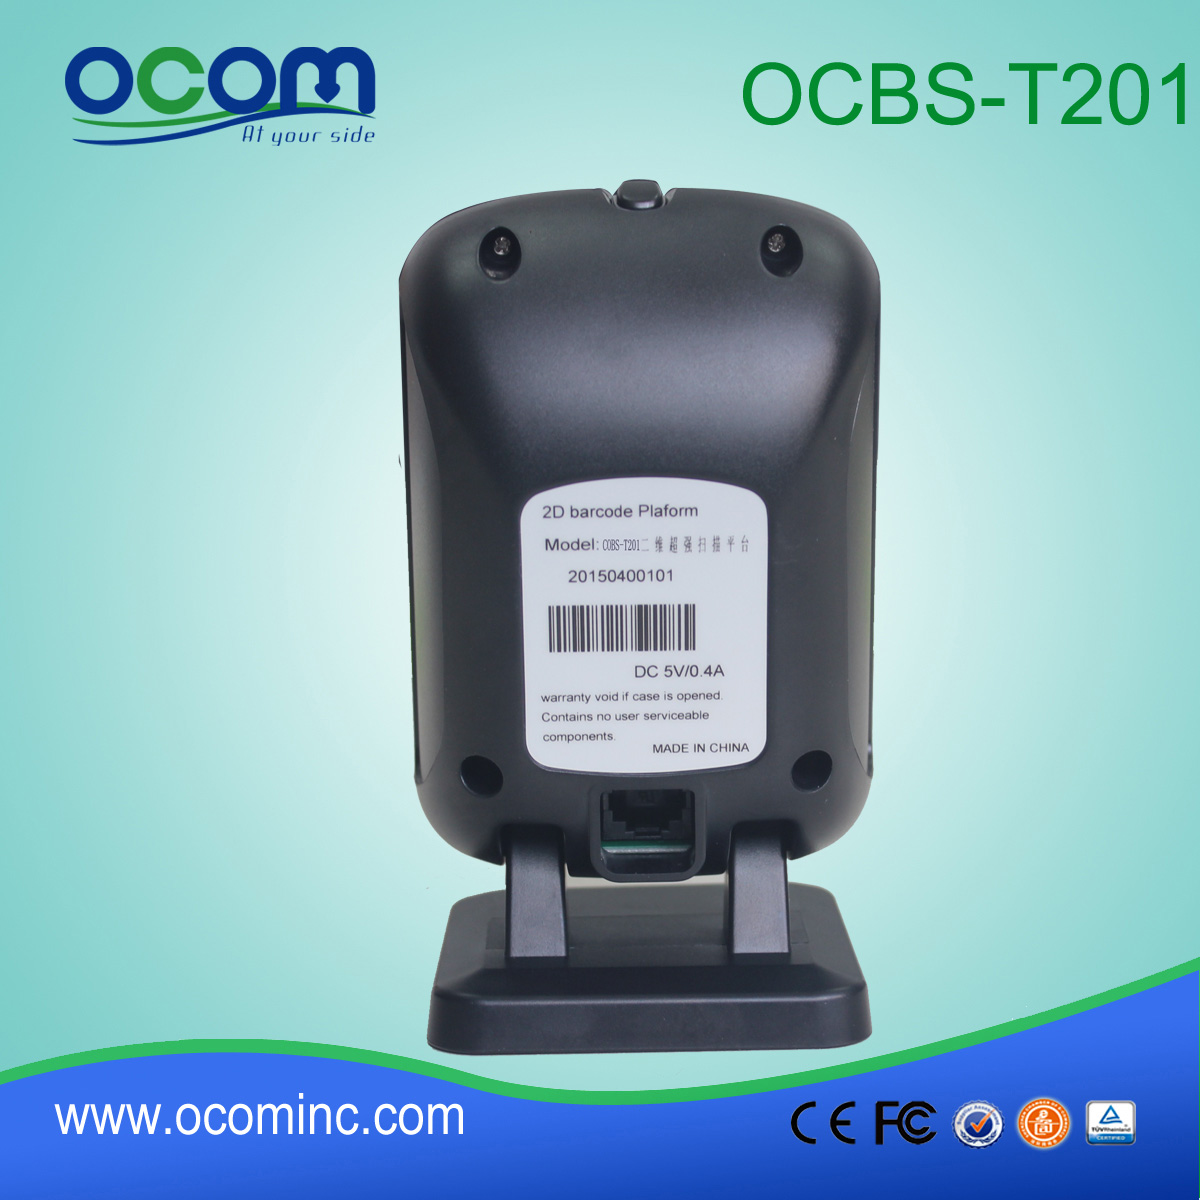 Scanner de código de barras 2D Imaging Handfree Interface usb OCBS-T201